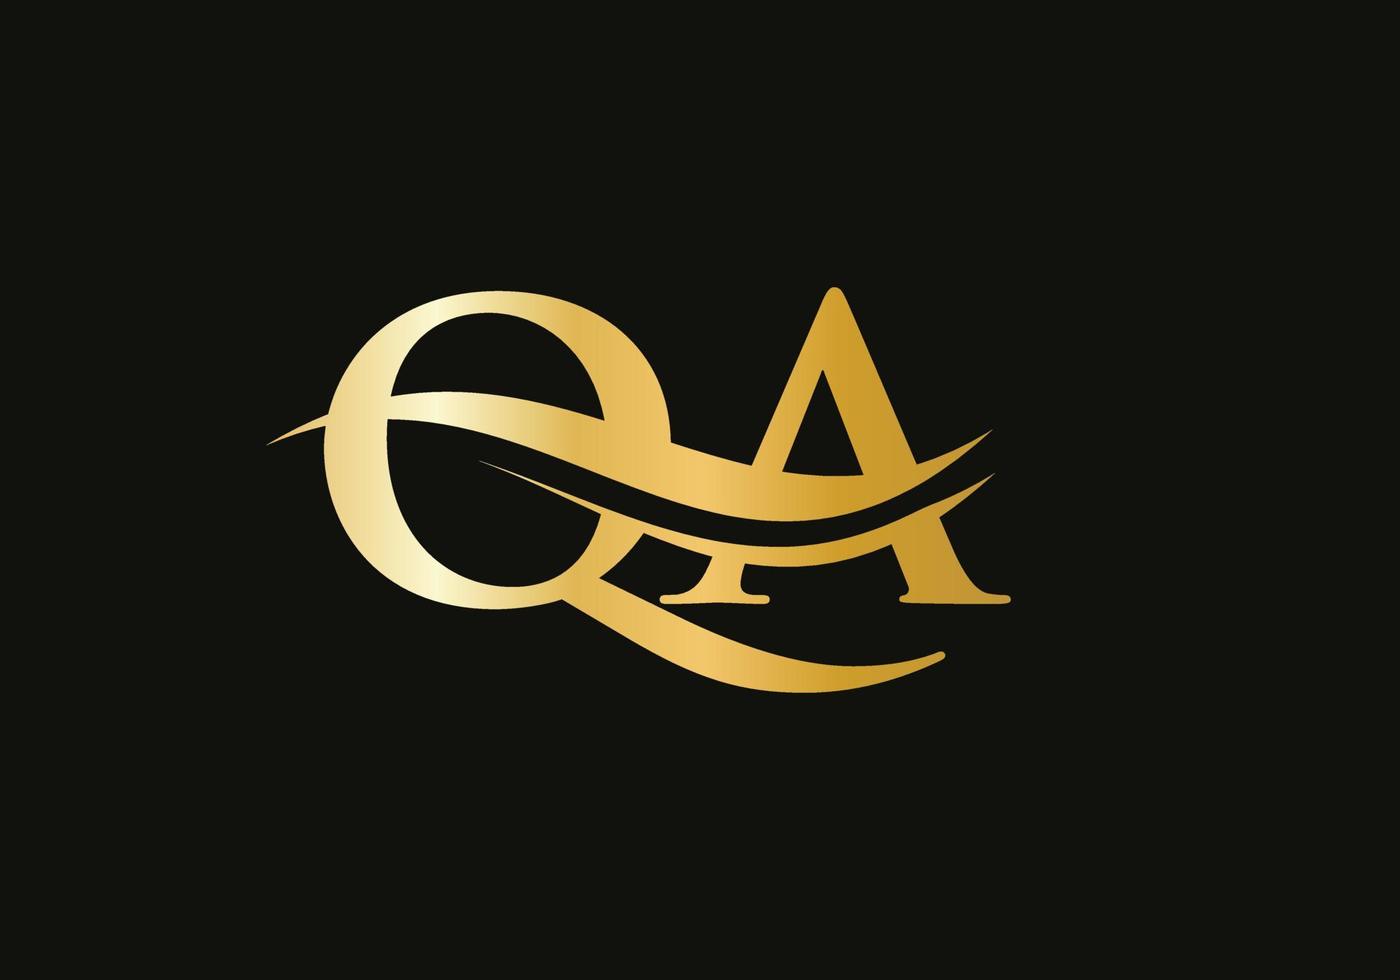 modelo de vetor de logotipo vinculado de carta qa inicial. design de logotipo de letra swoosh qa. design de logotipo qa com moda moderna